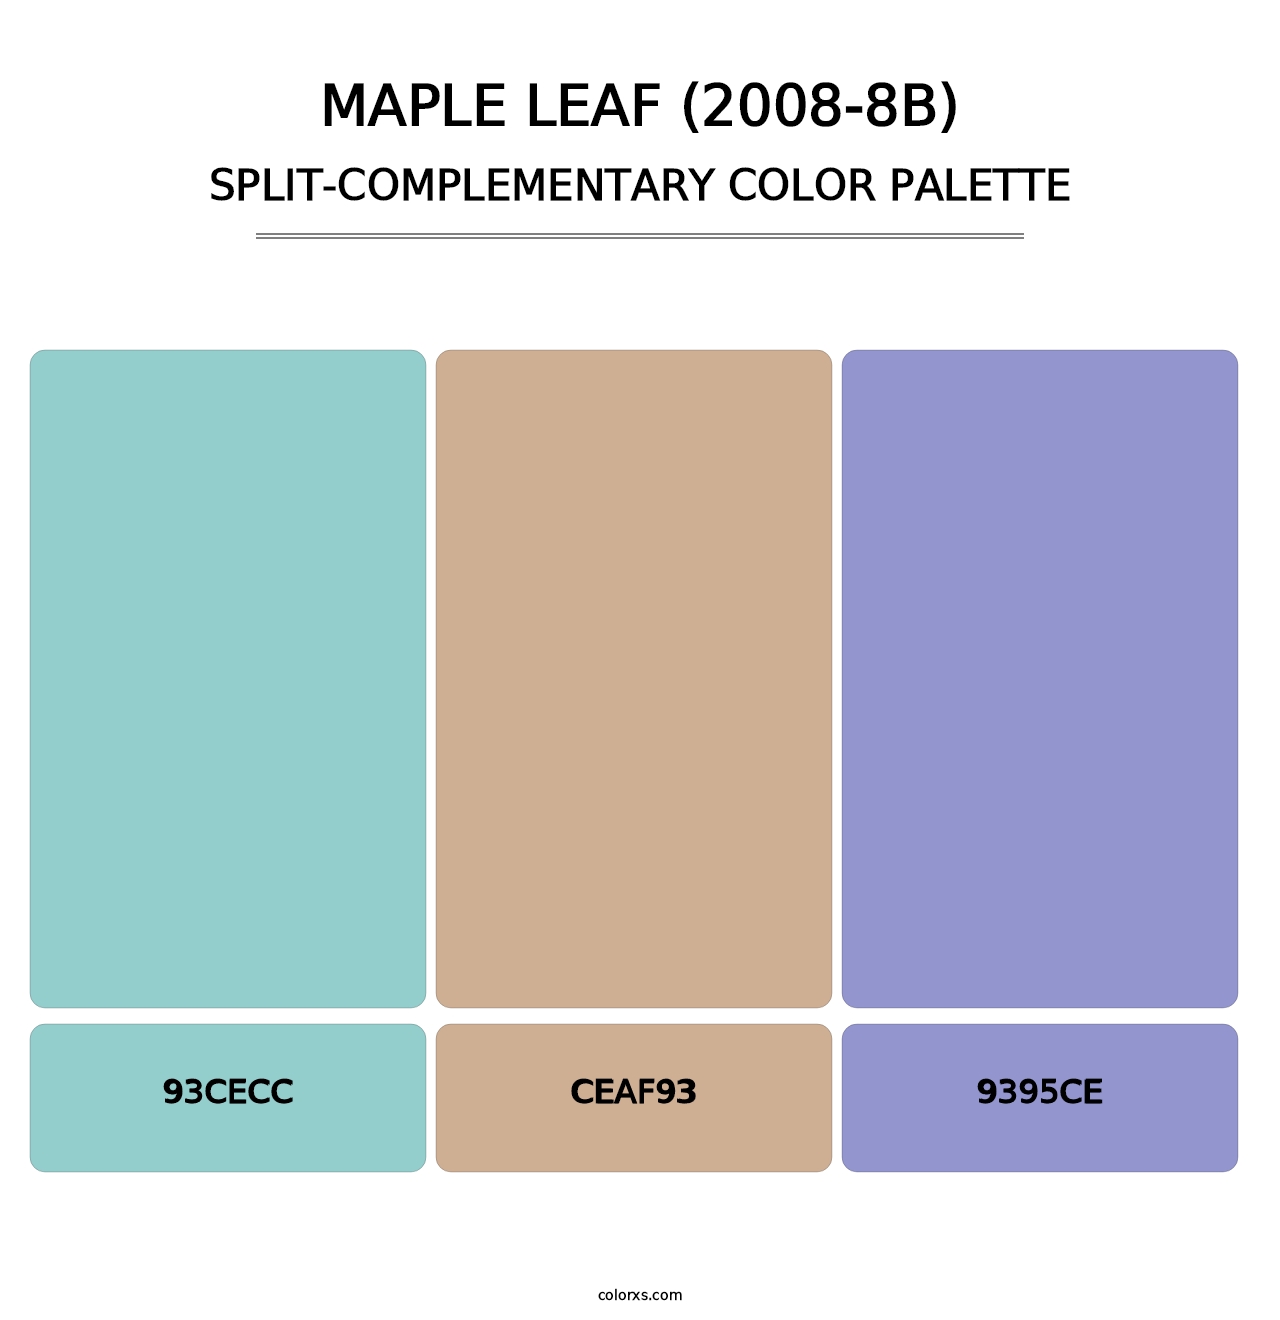 Maple Leaf (2008-8B) - Split-Complementary Color Palette